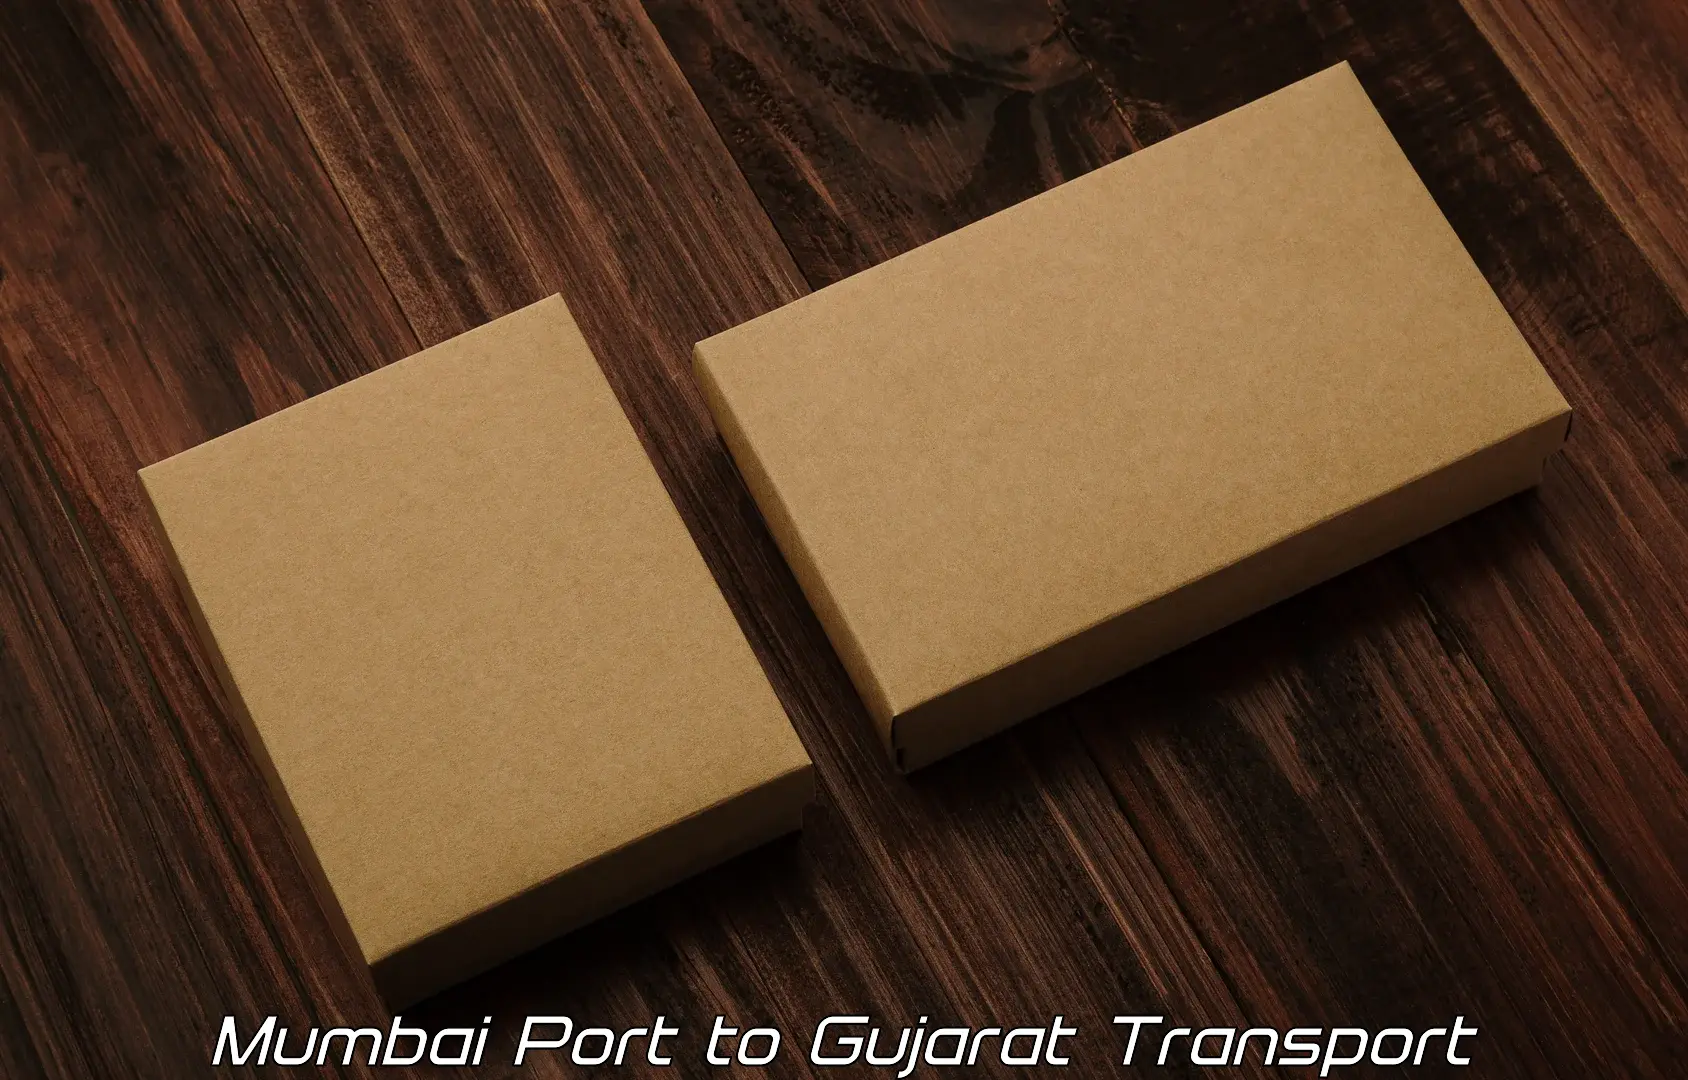 Pick up transport service Mumbai Port to Gujarat